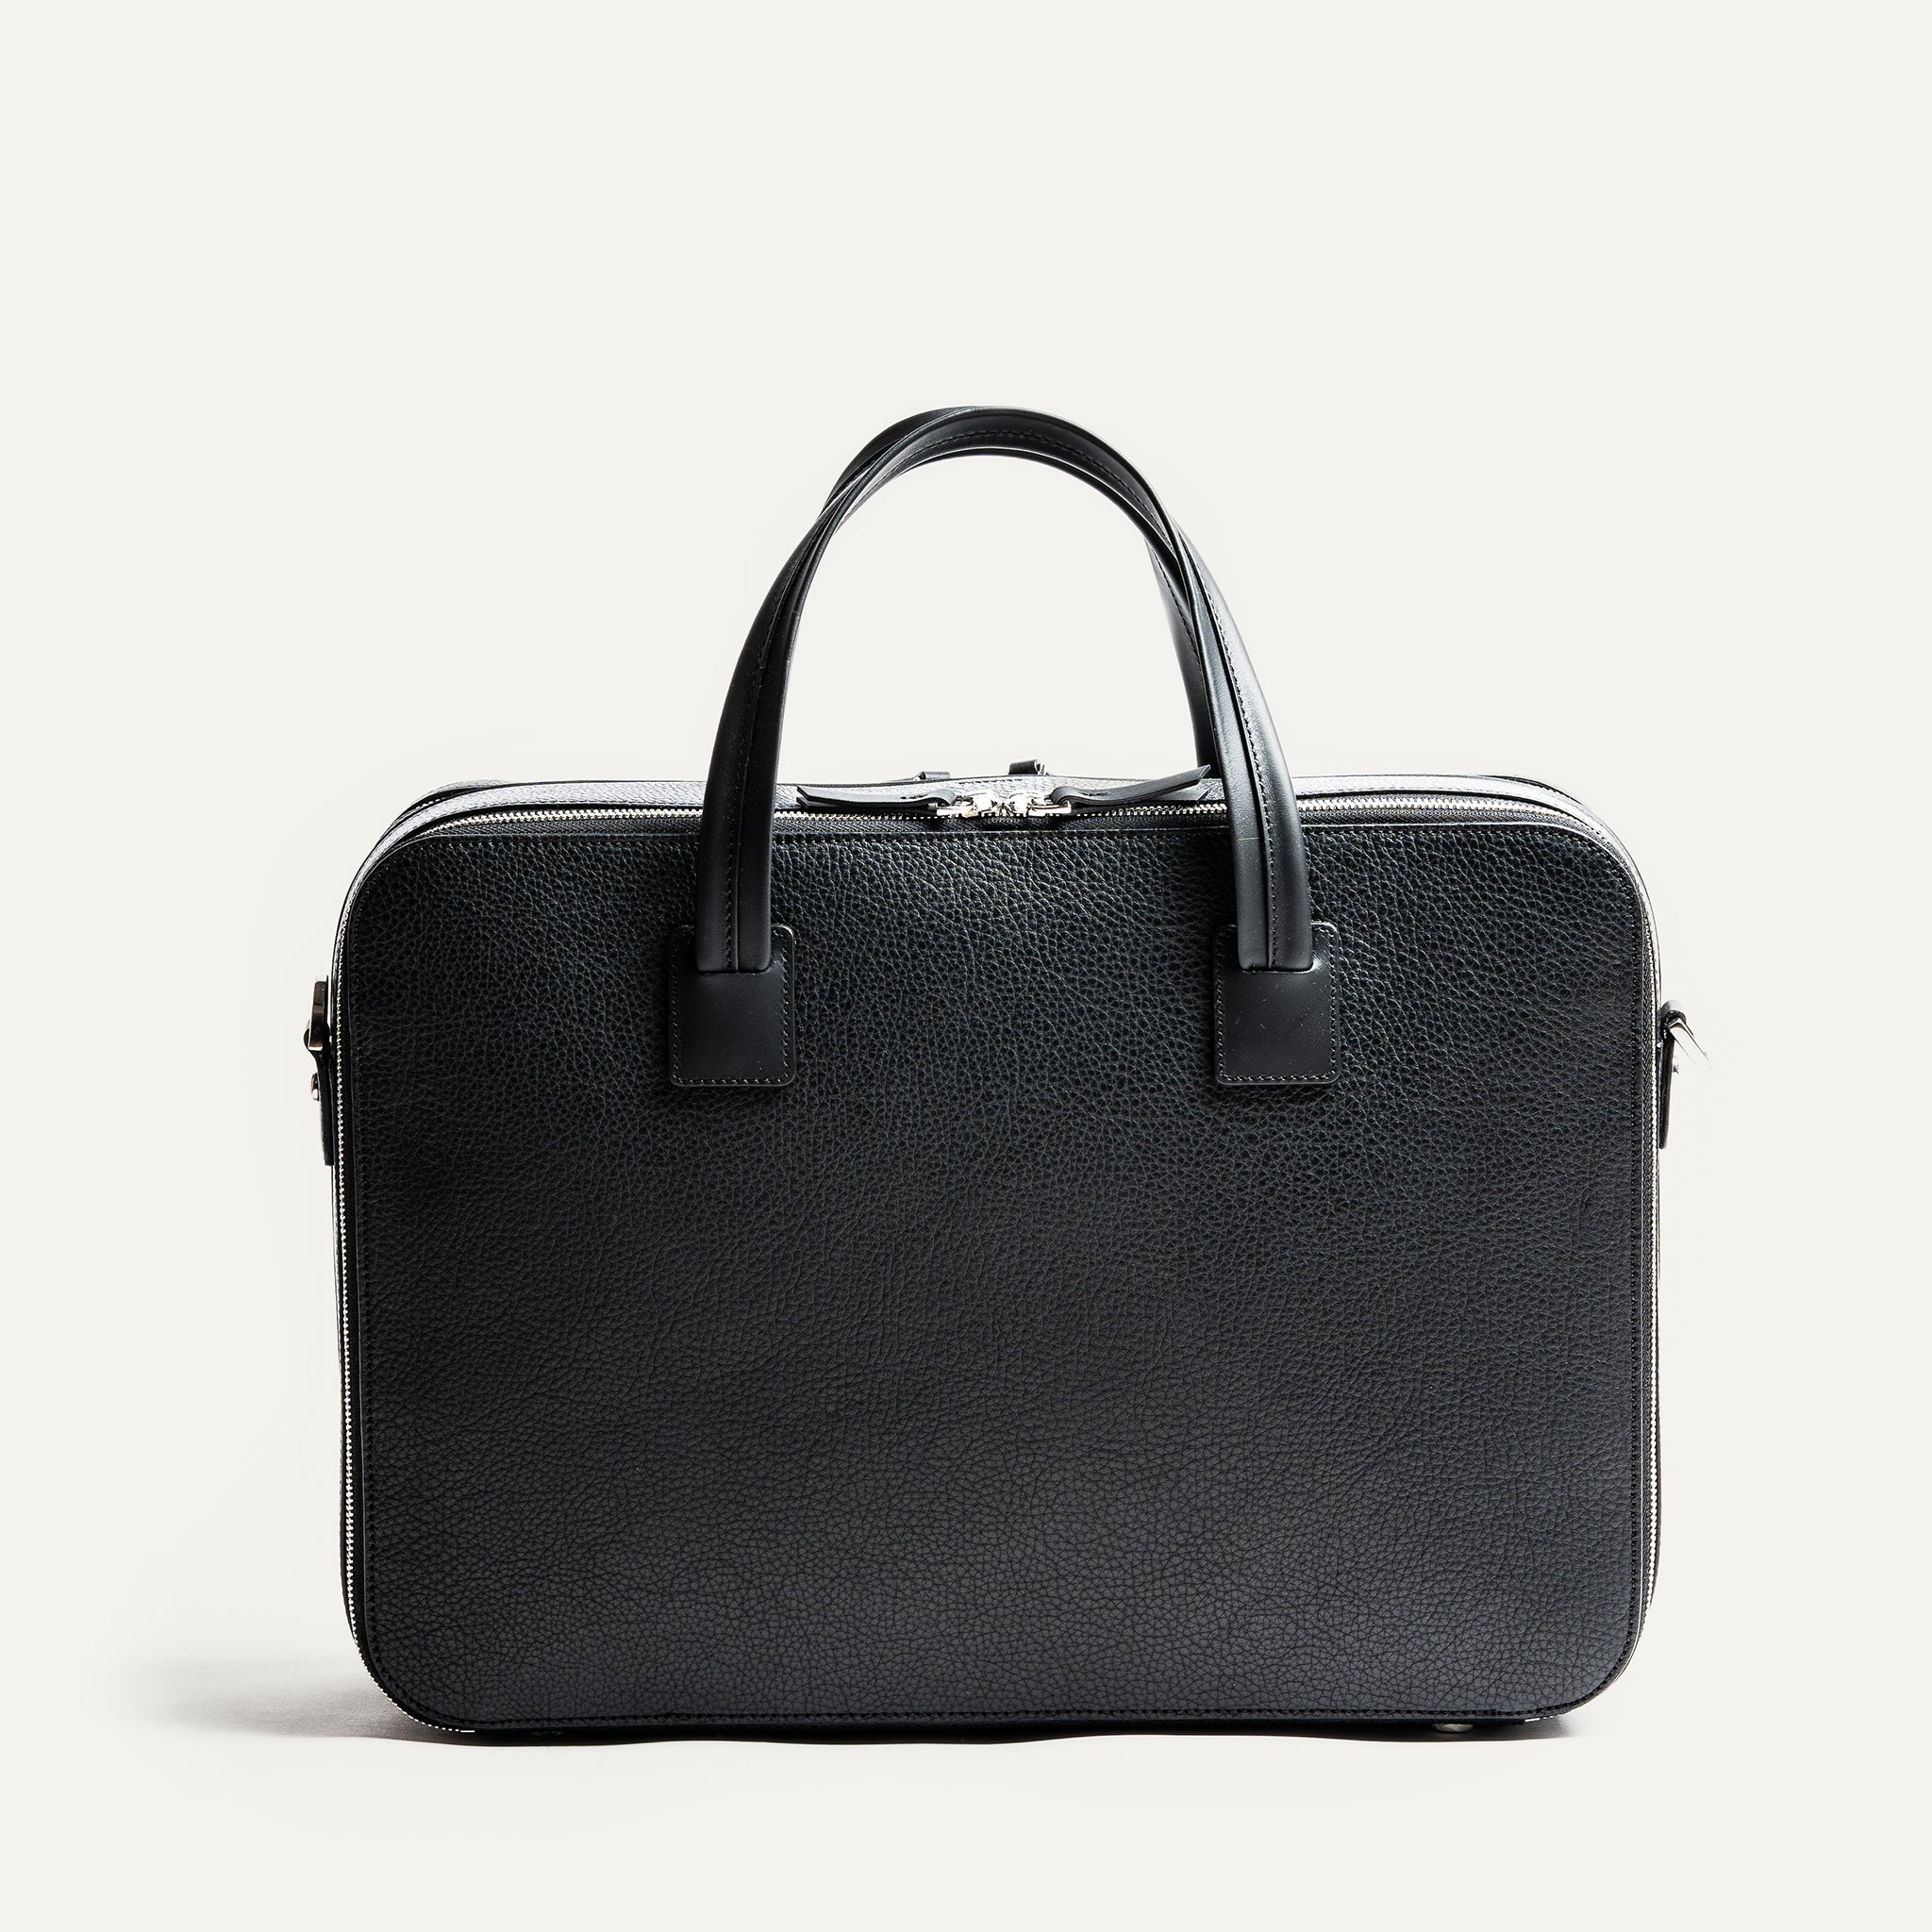 TILIO II - Black | lundi 36 hour laptop bag in full grained leather